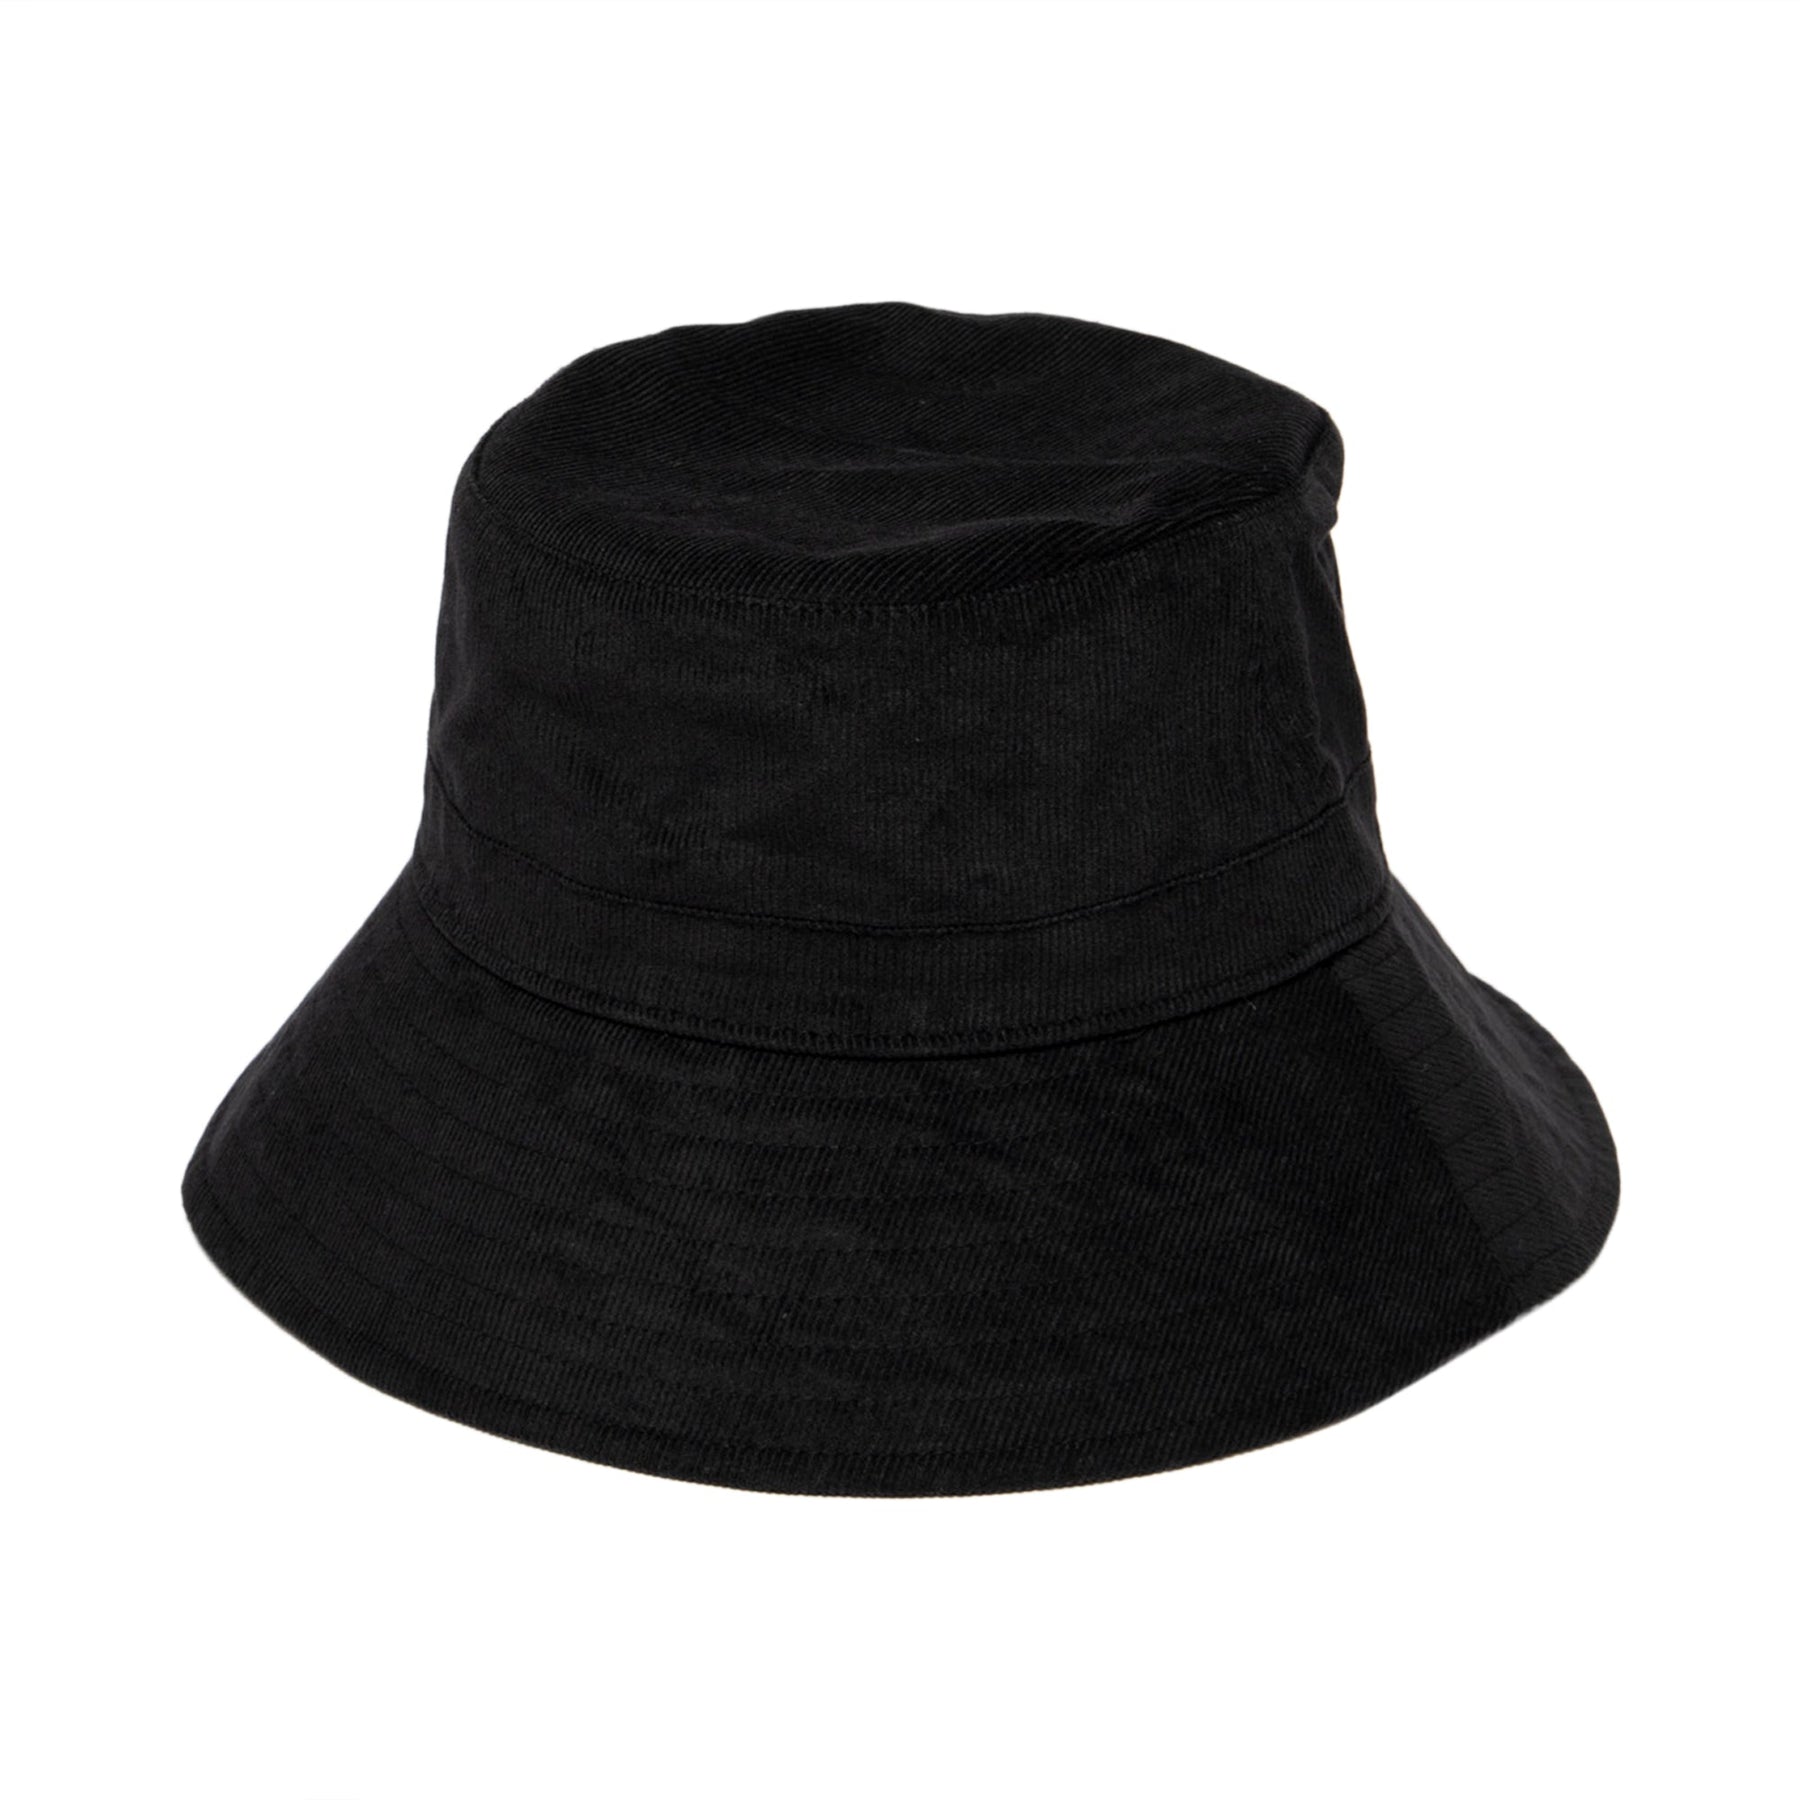 The Main Street Bucket – San Diego Hat Company